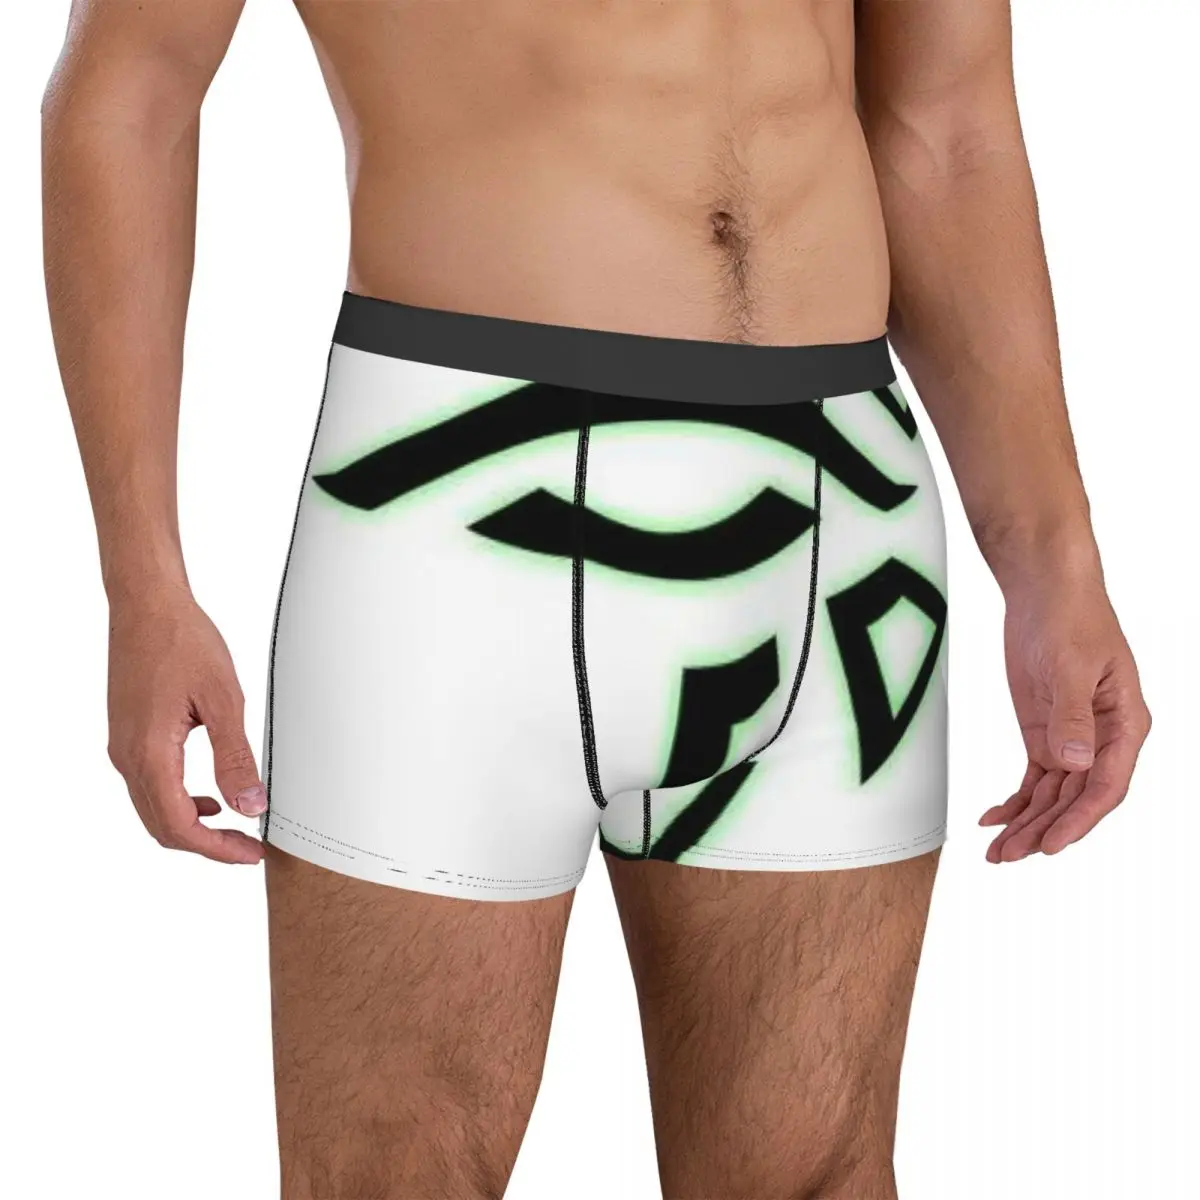 

Ingress Underwear ingress ENT Breathable Underpants Customs Boxer Brief Pouch Males Plus Size Boxershorts